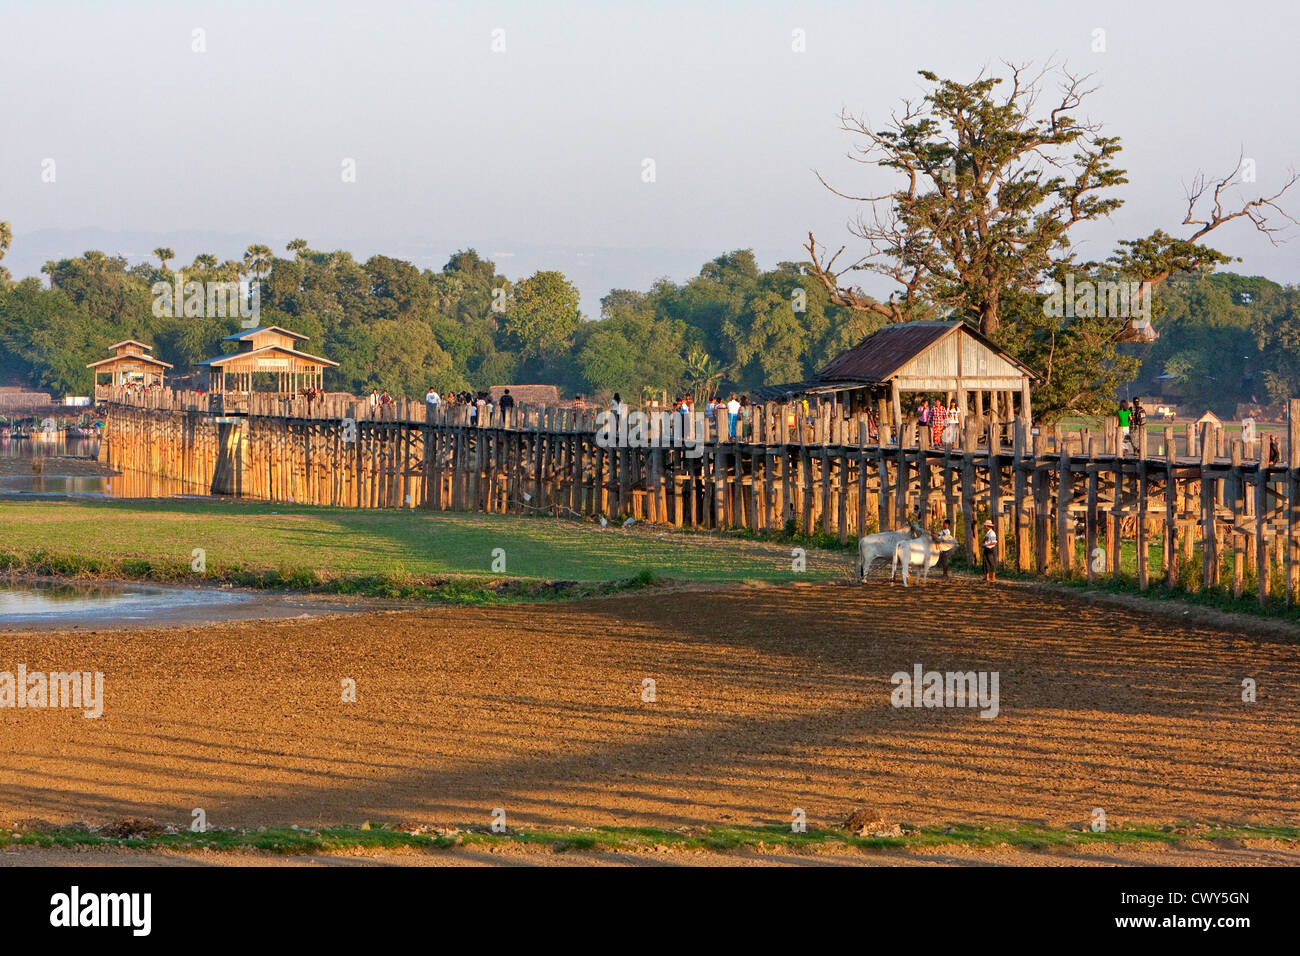 Myanmar, Burma, Mandalay. U Bein Brücke, Amarapura, eine 200-Year-Old Teak Fußgängerbrücke. Stockfoto